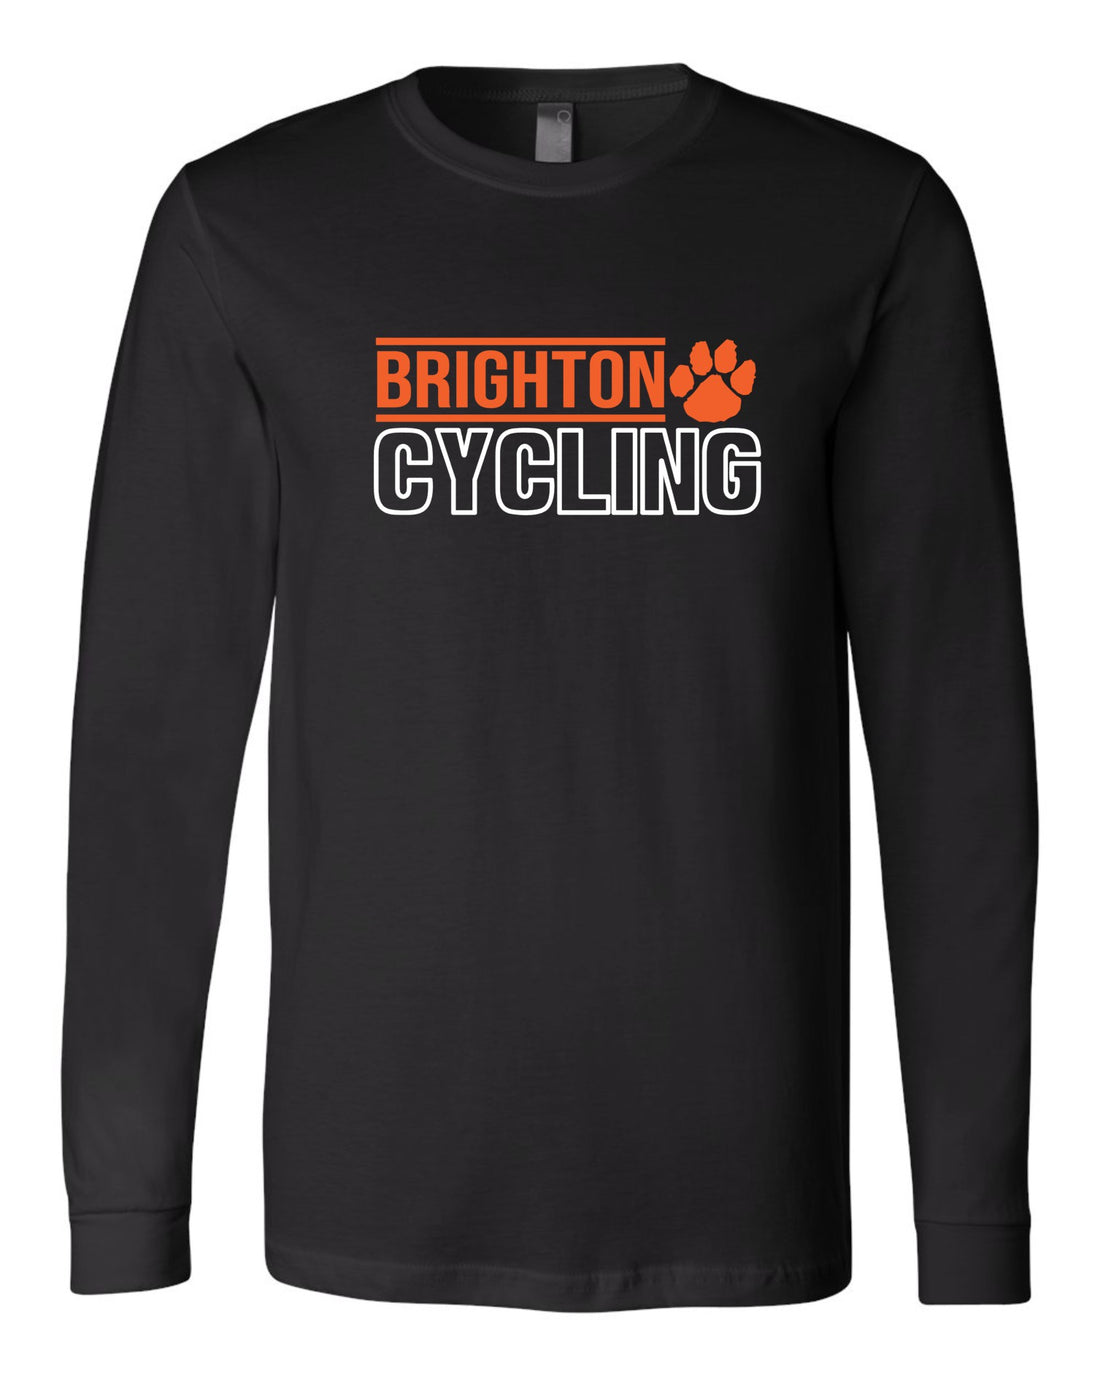 Brighton Cycling Premium Cotton L/S Tee